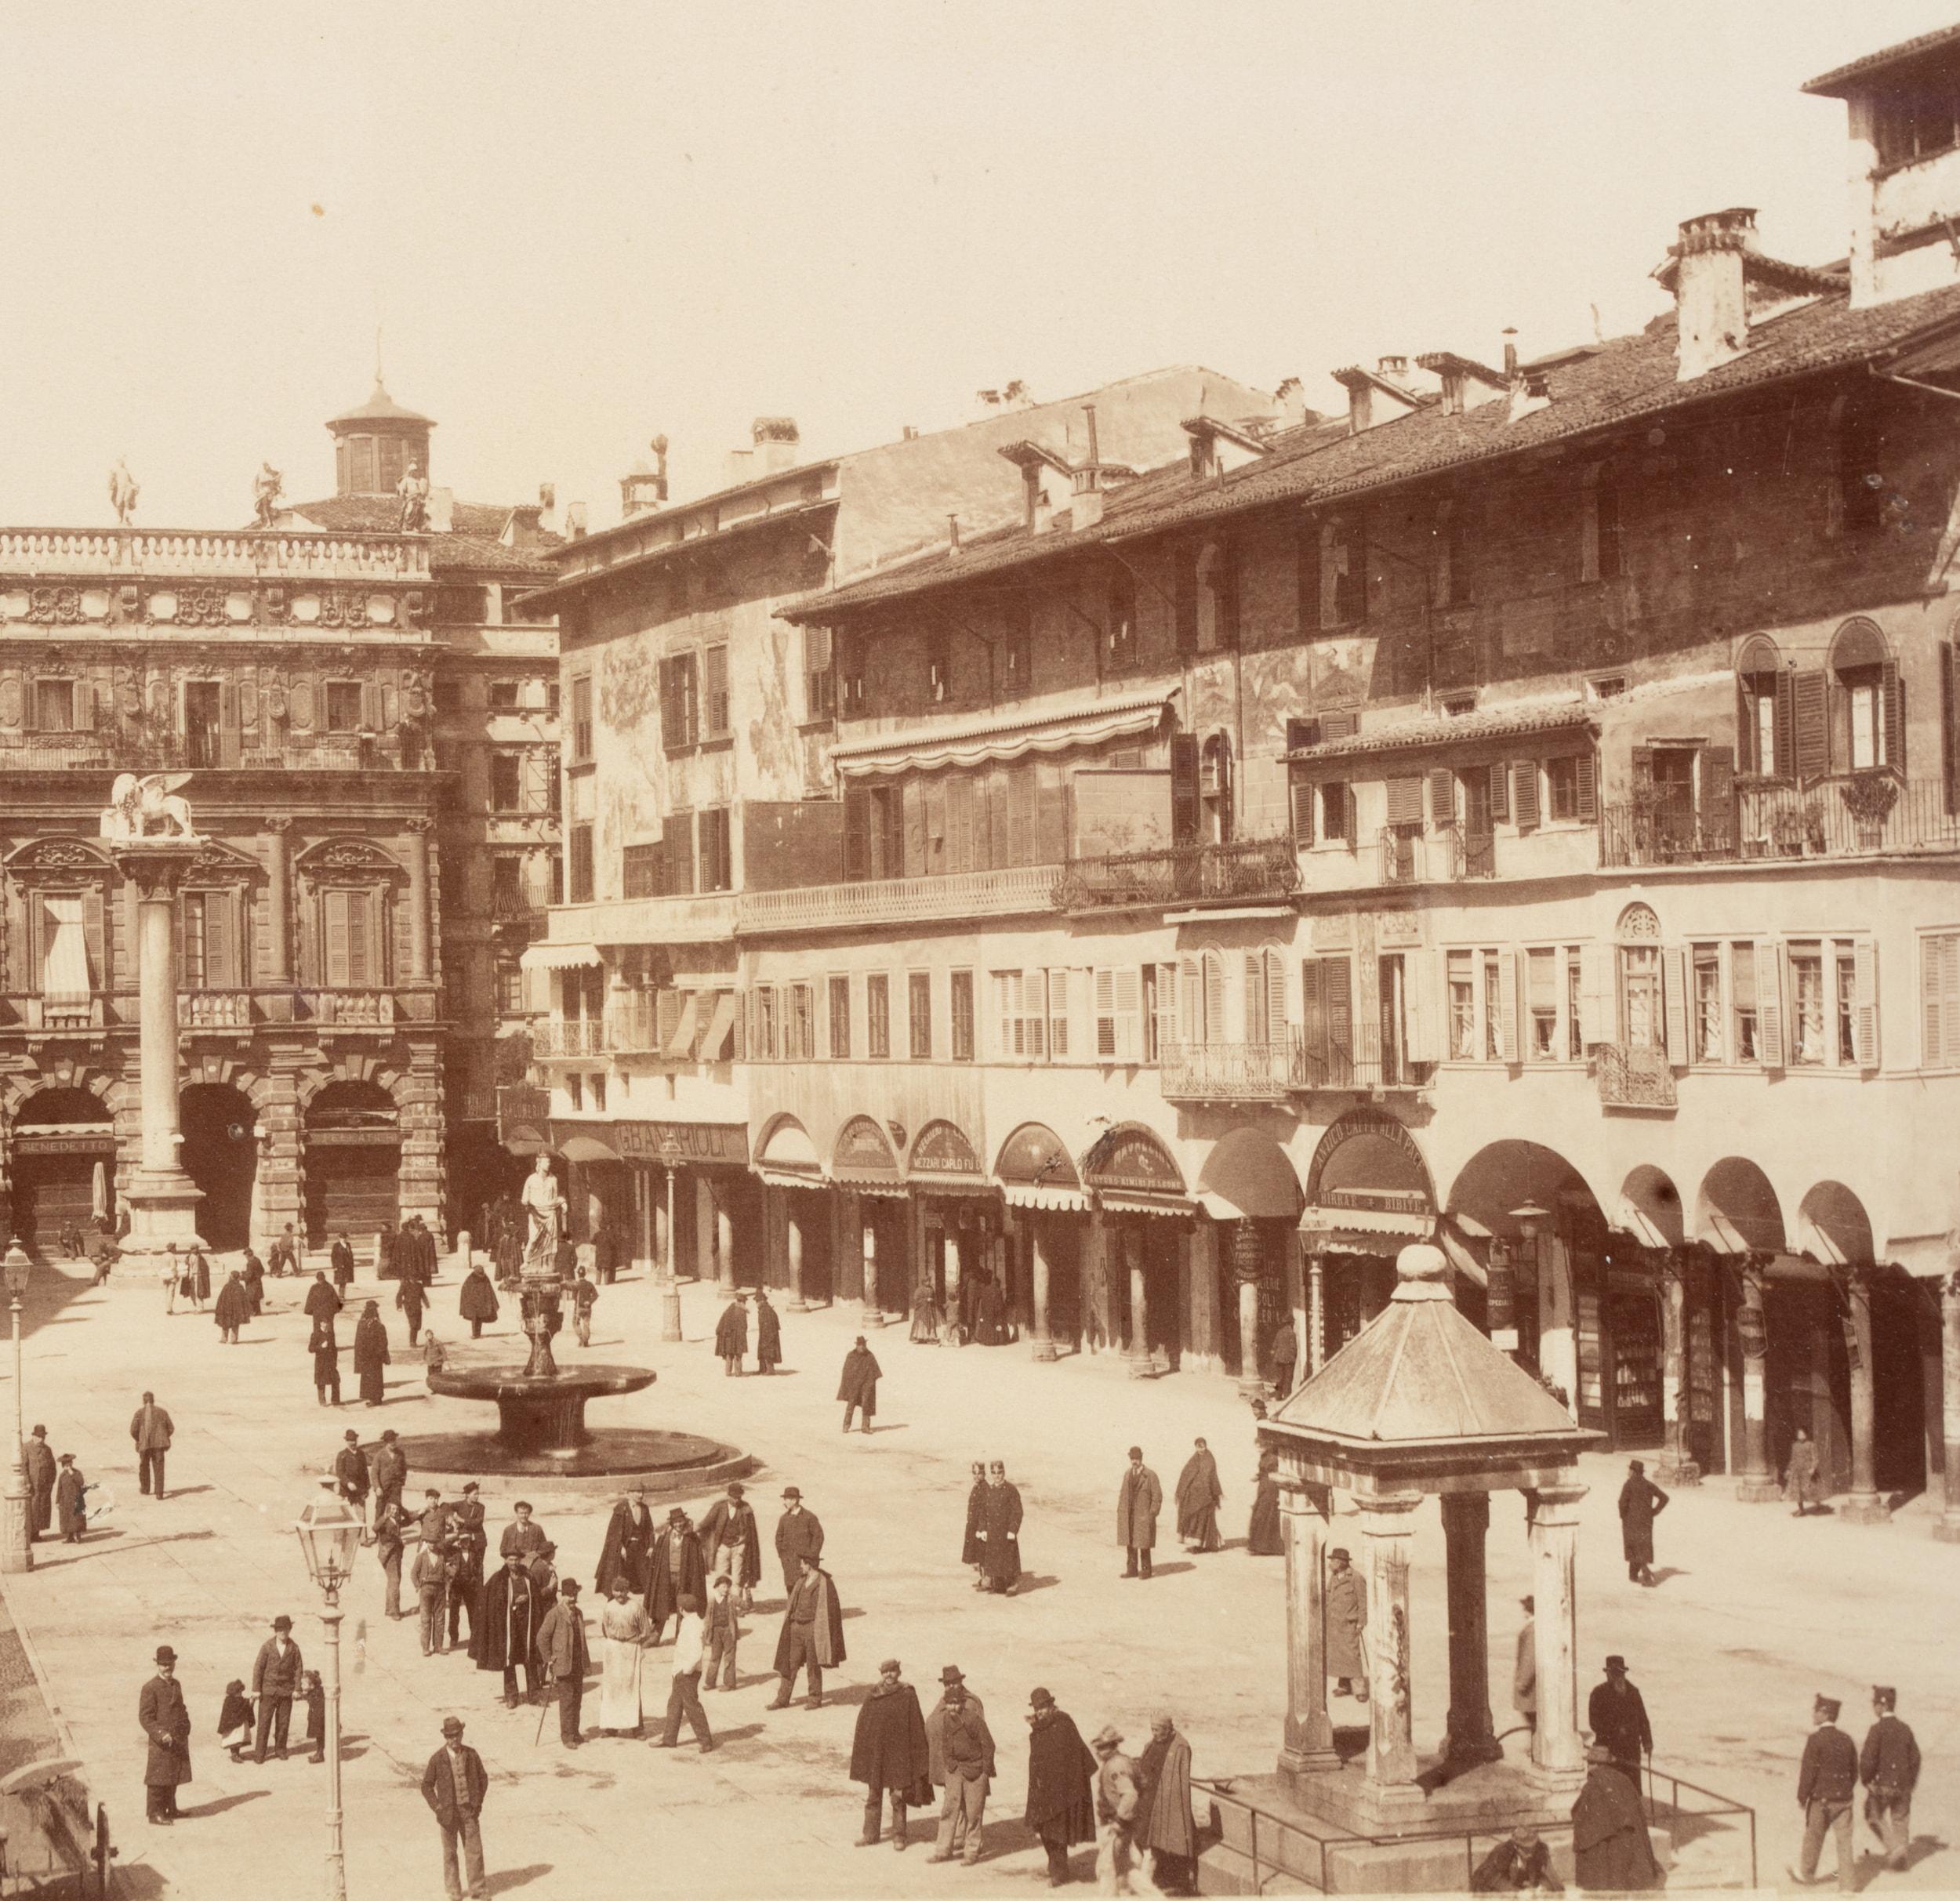 View over the Piazza delle Erbe, Verona - Photograph by Unknown